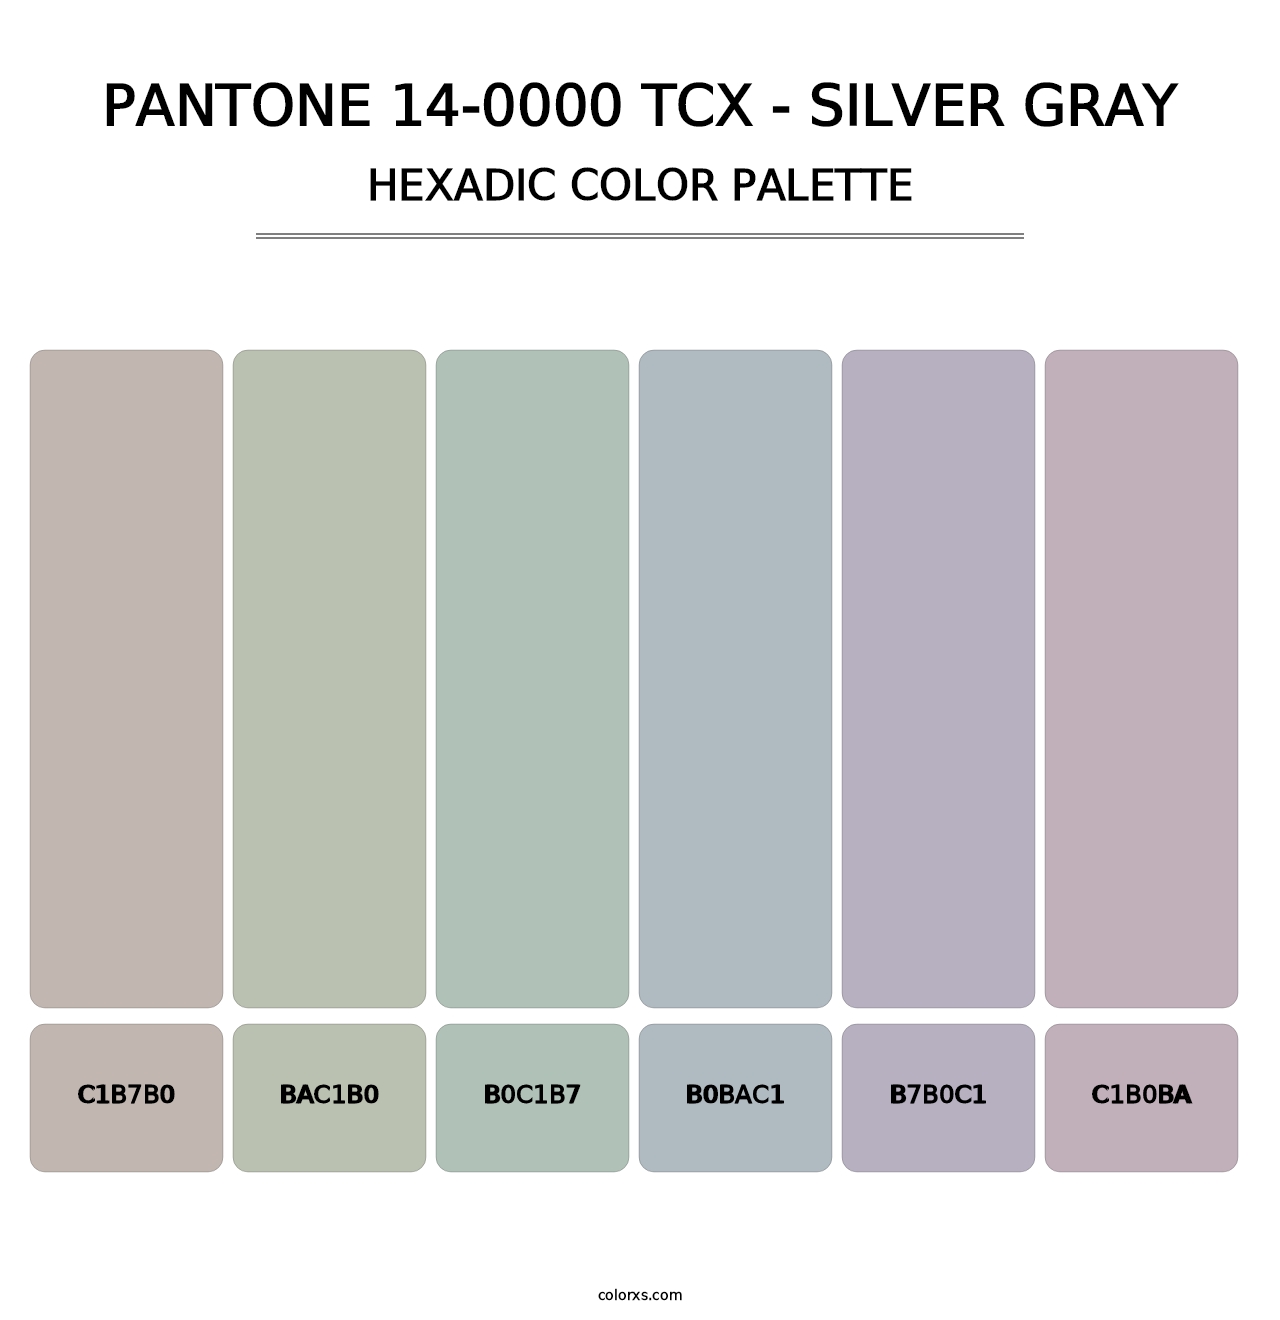 PANTONE 14-0000 TCX - Silver Gray - Hexadic Color Palette